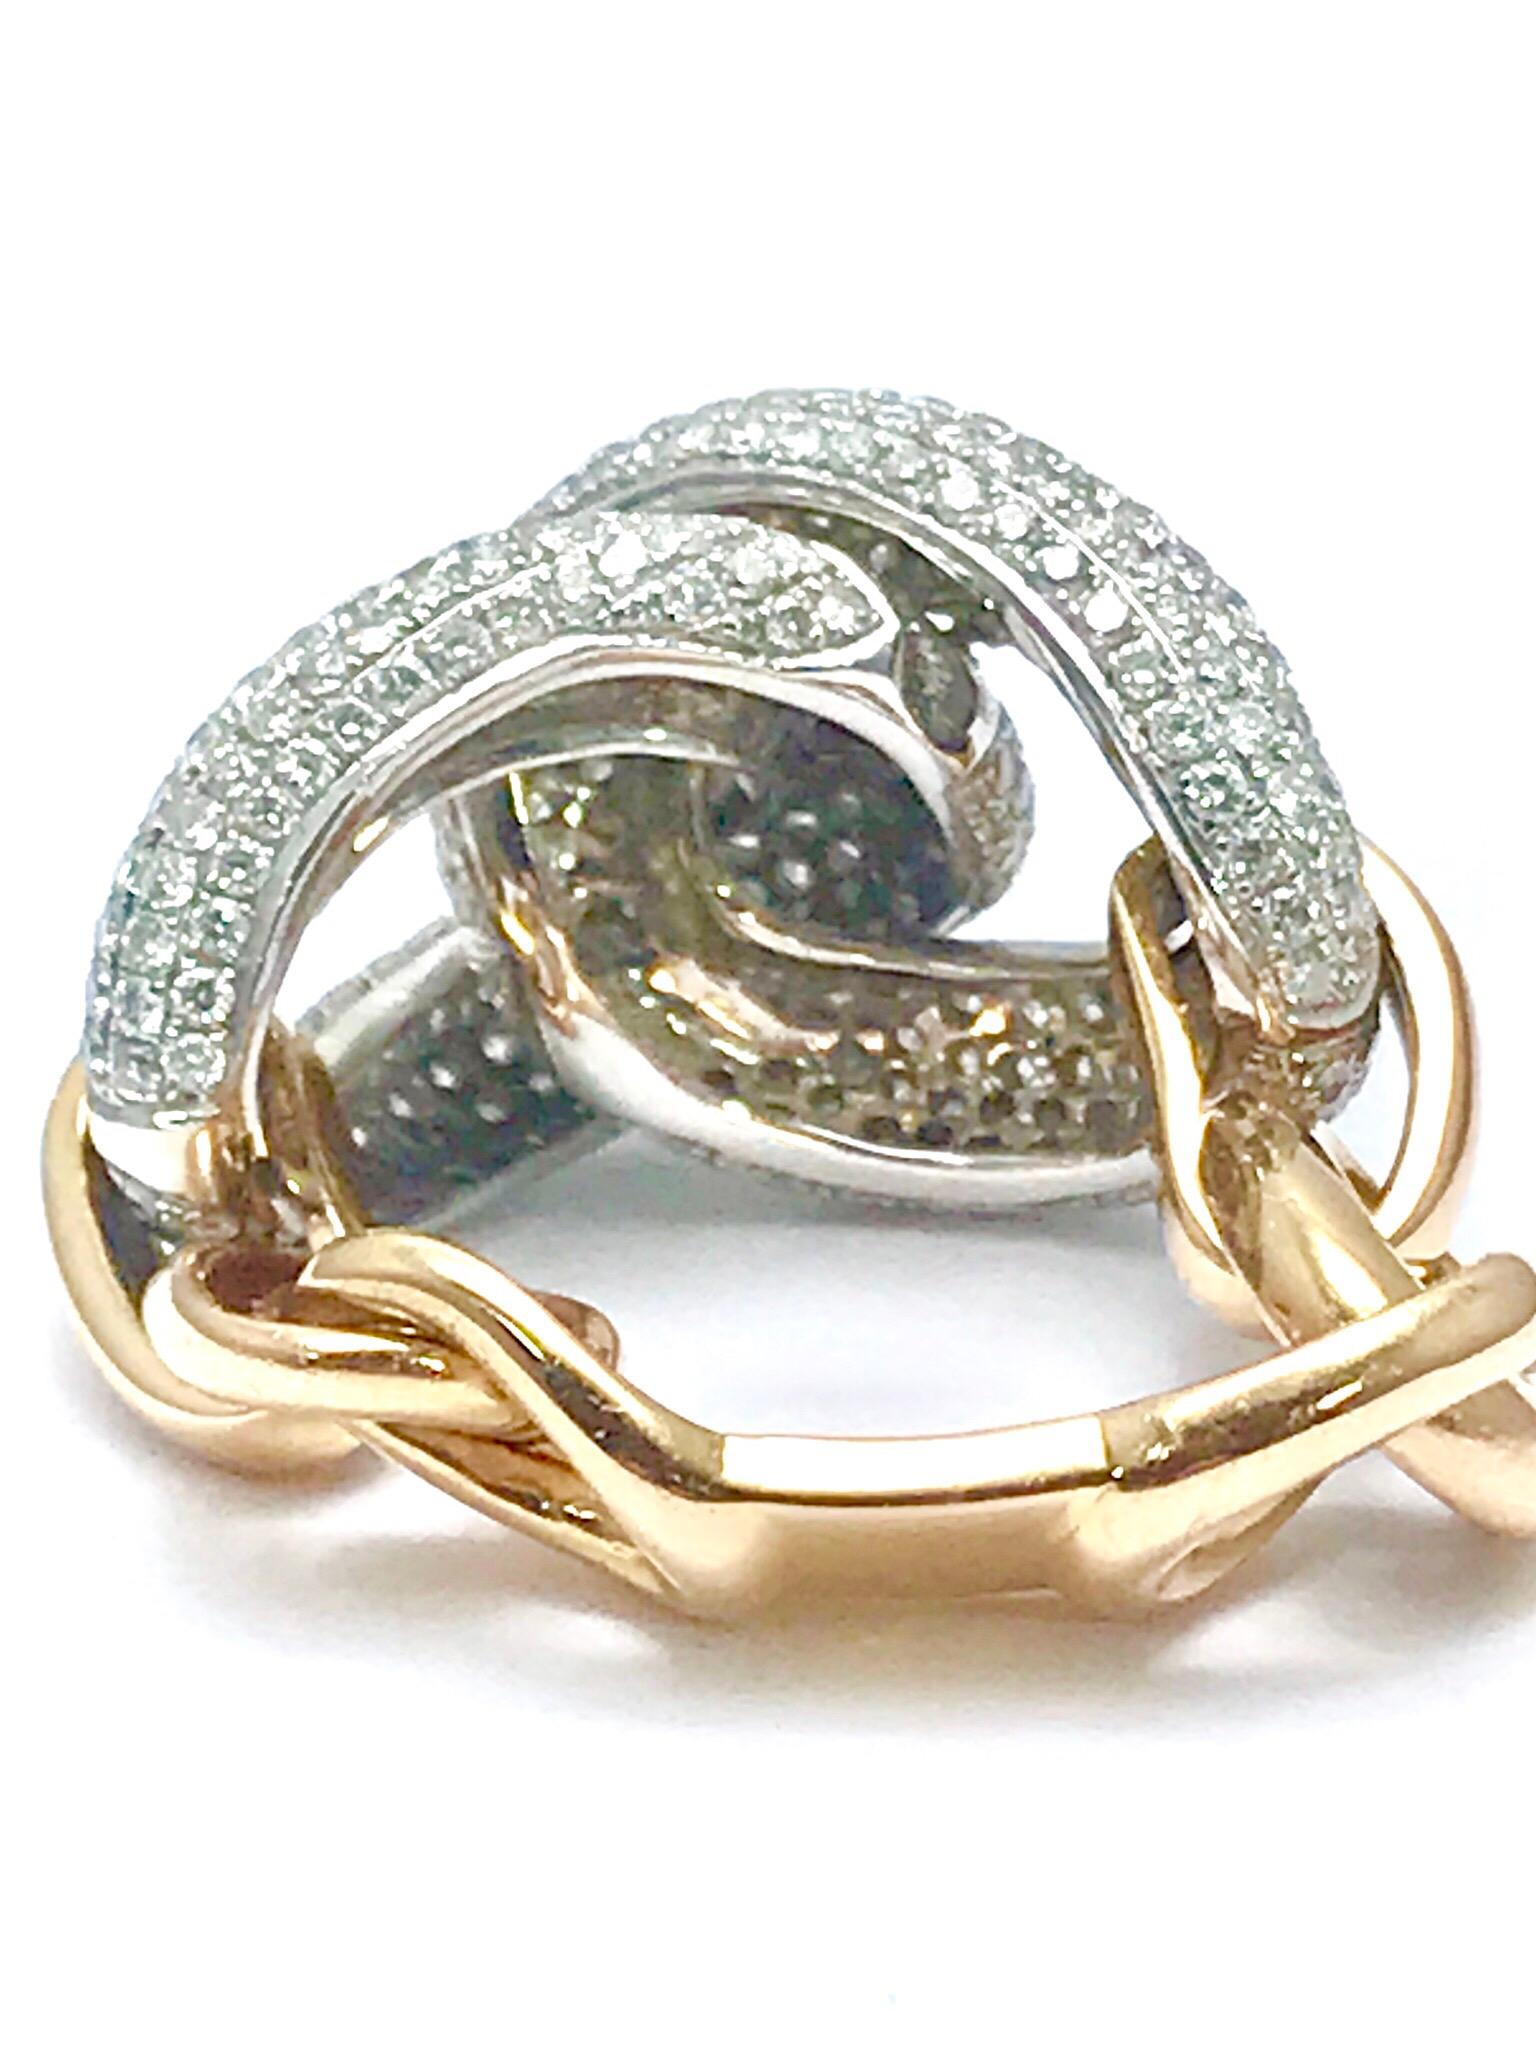 Round Cut 2.35 Carat Round Brilliant Pave Diamond Rose Gold Chain Link Fashion Ring